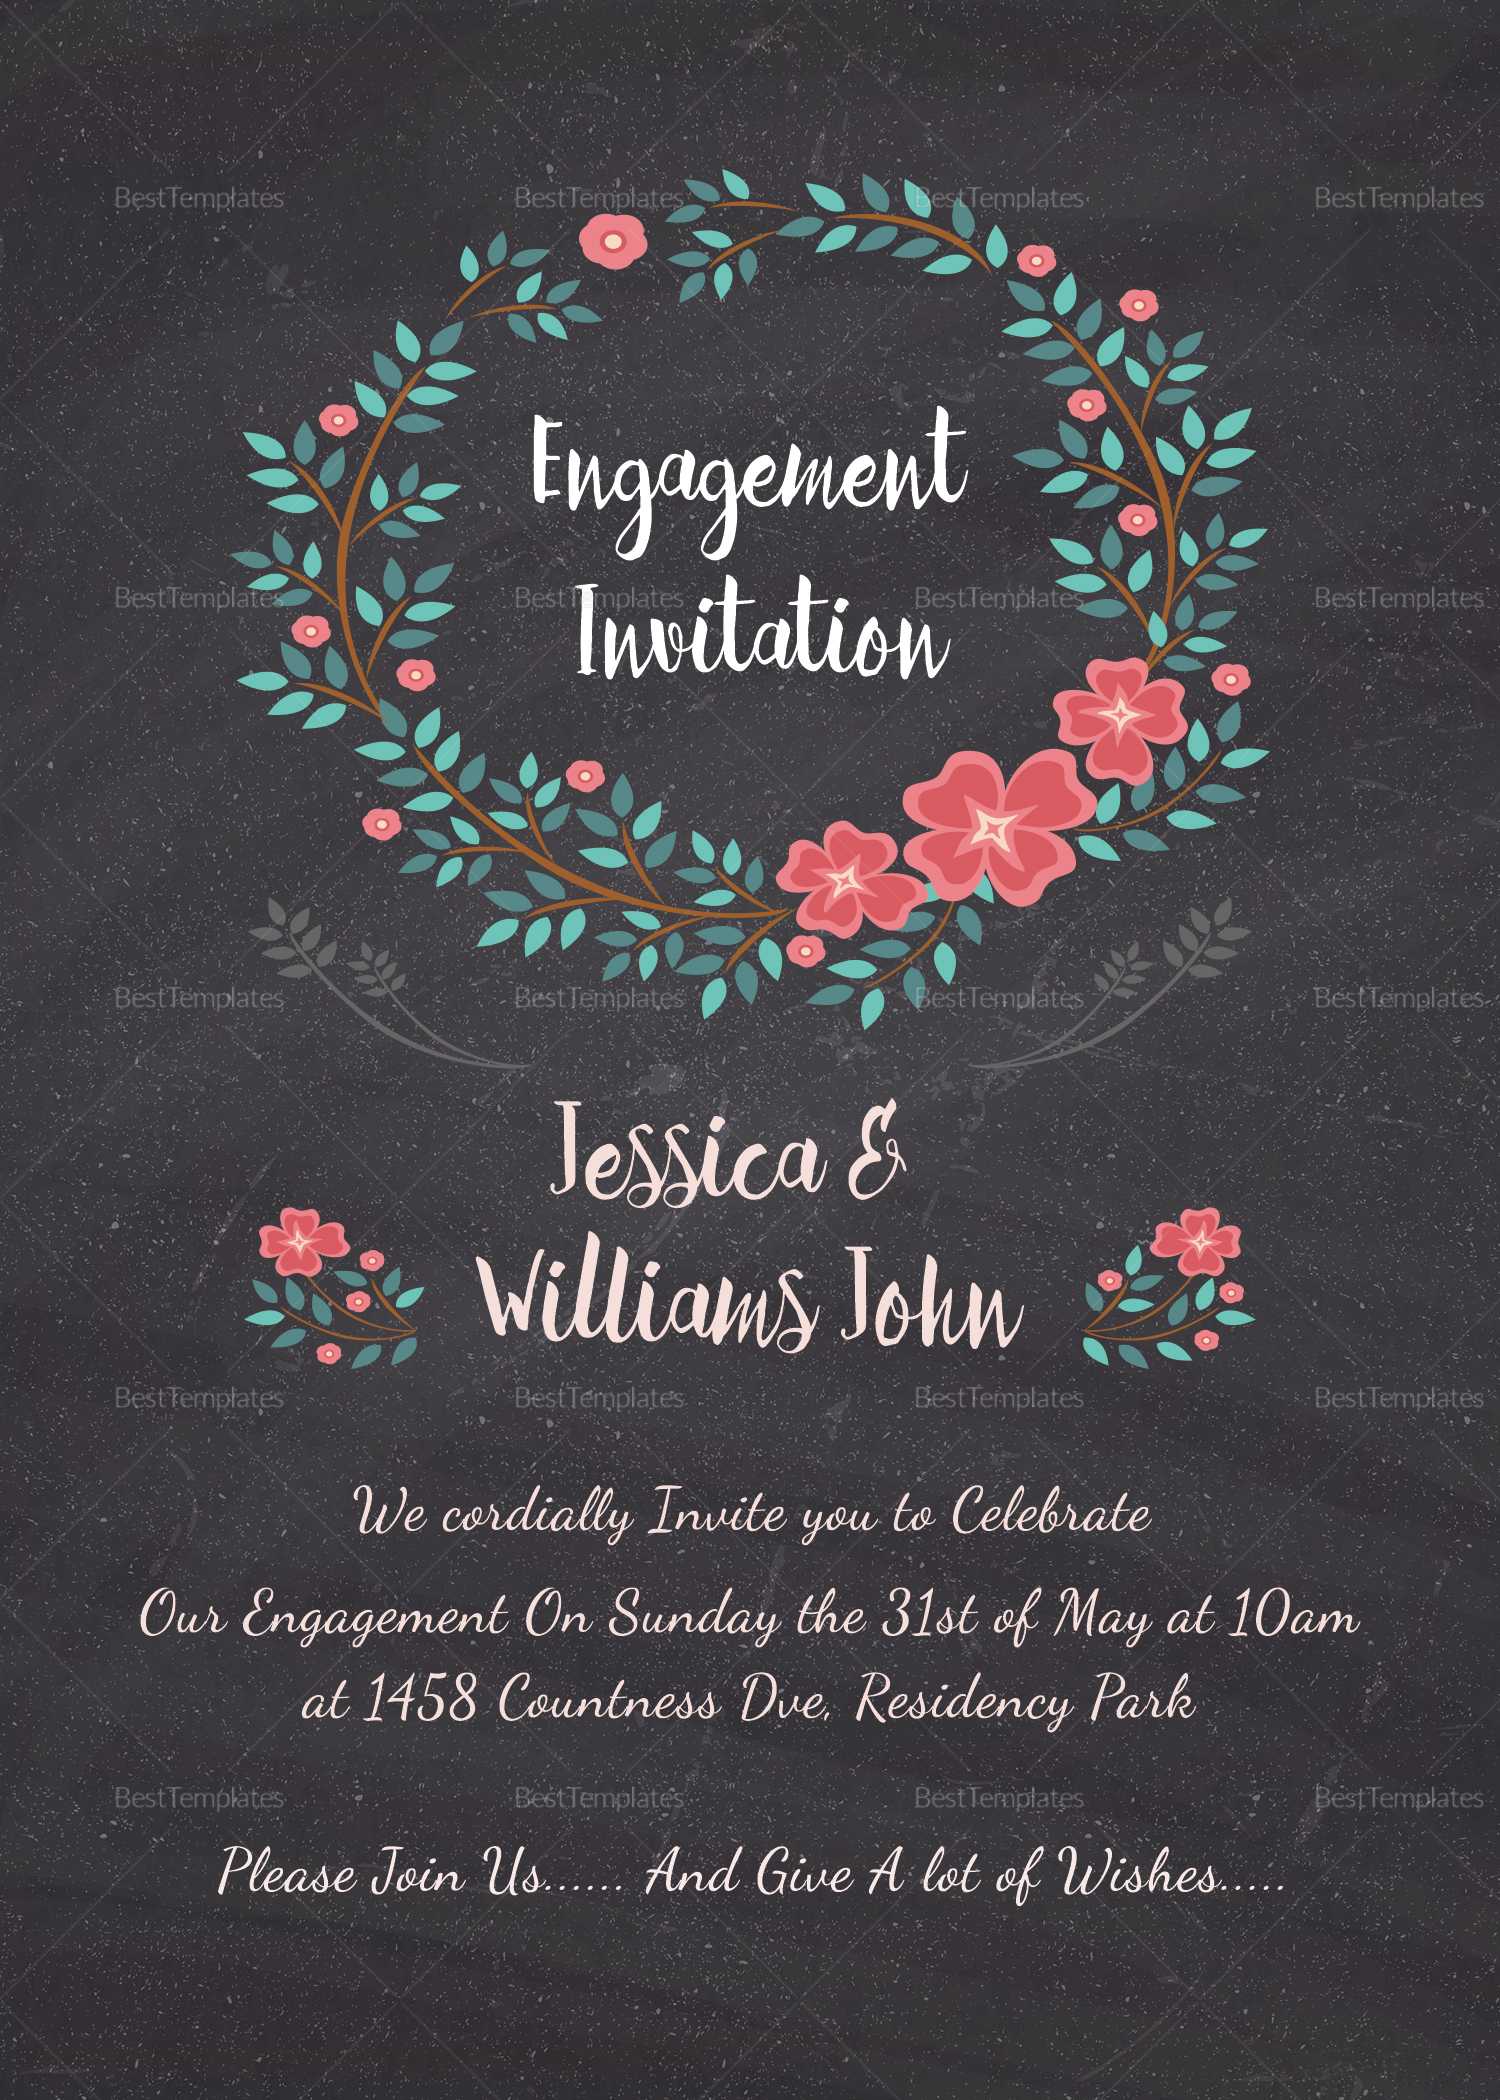 Engagement Invitation Card Template Pertaining To Engagement Invitation Card Template